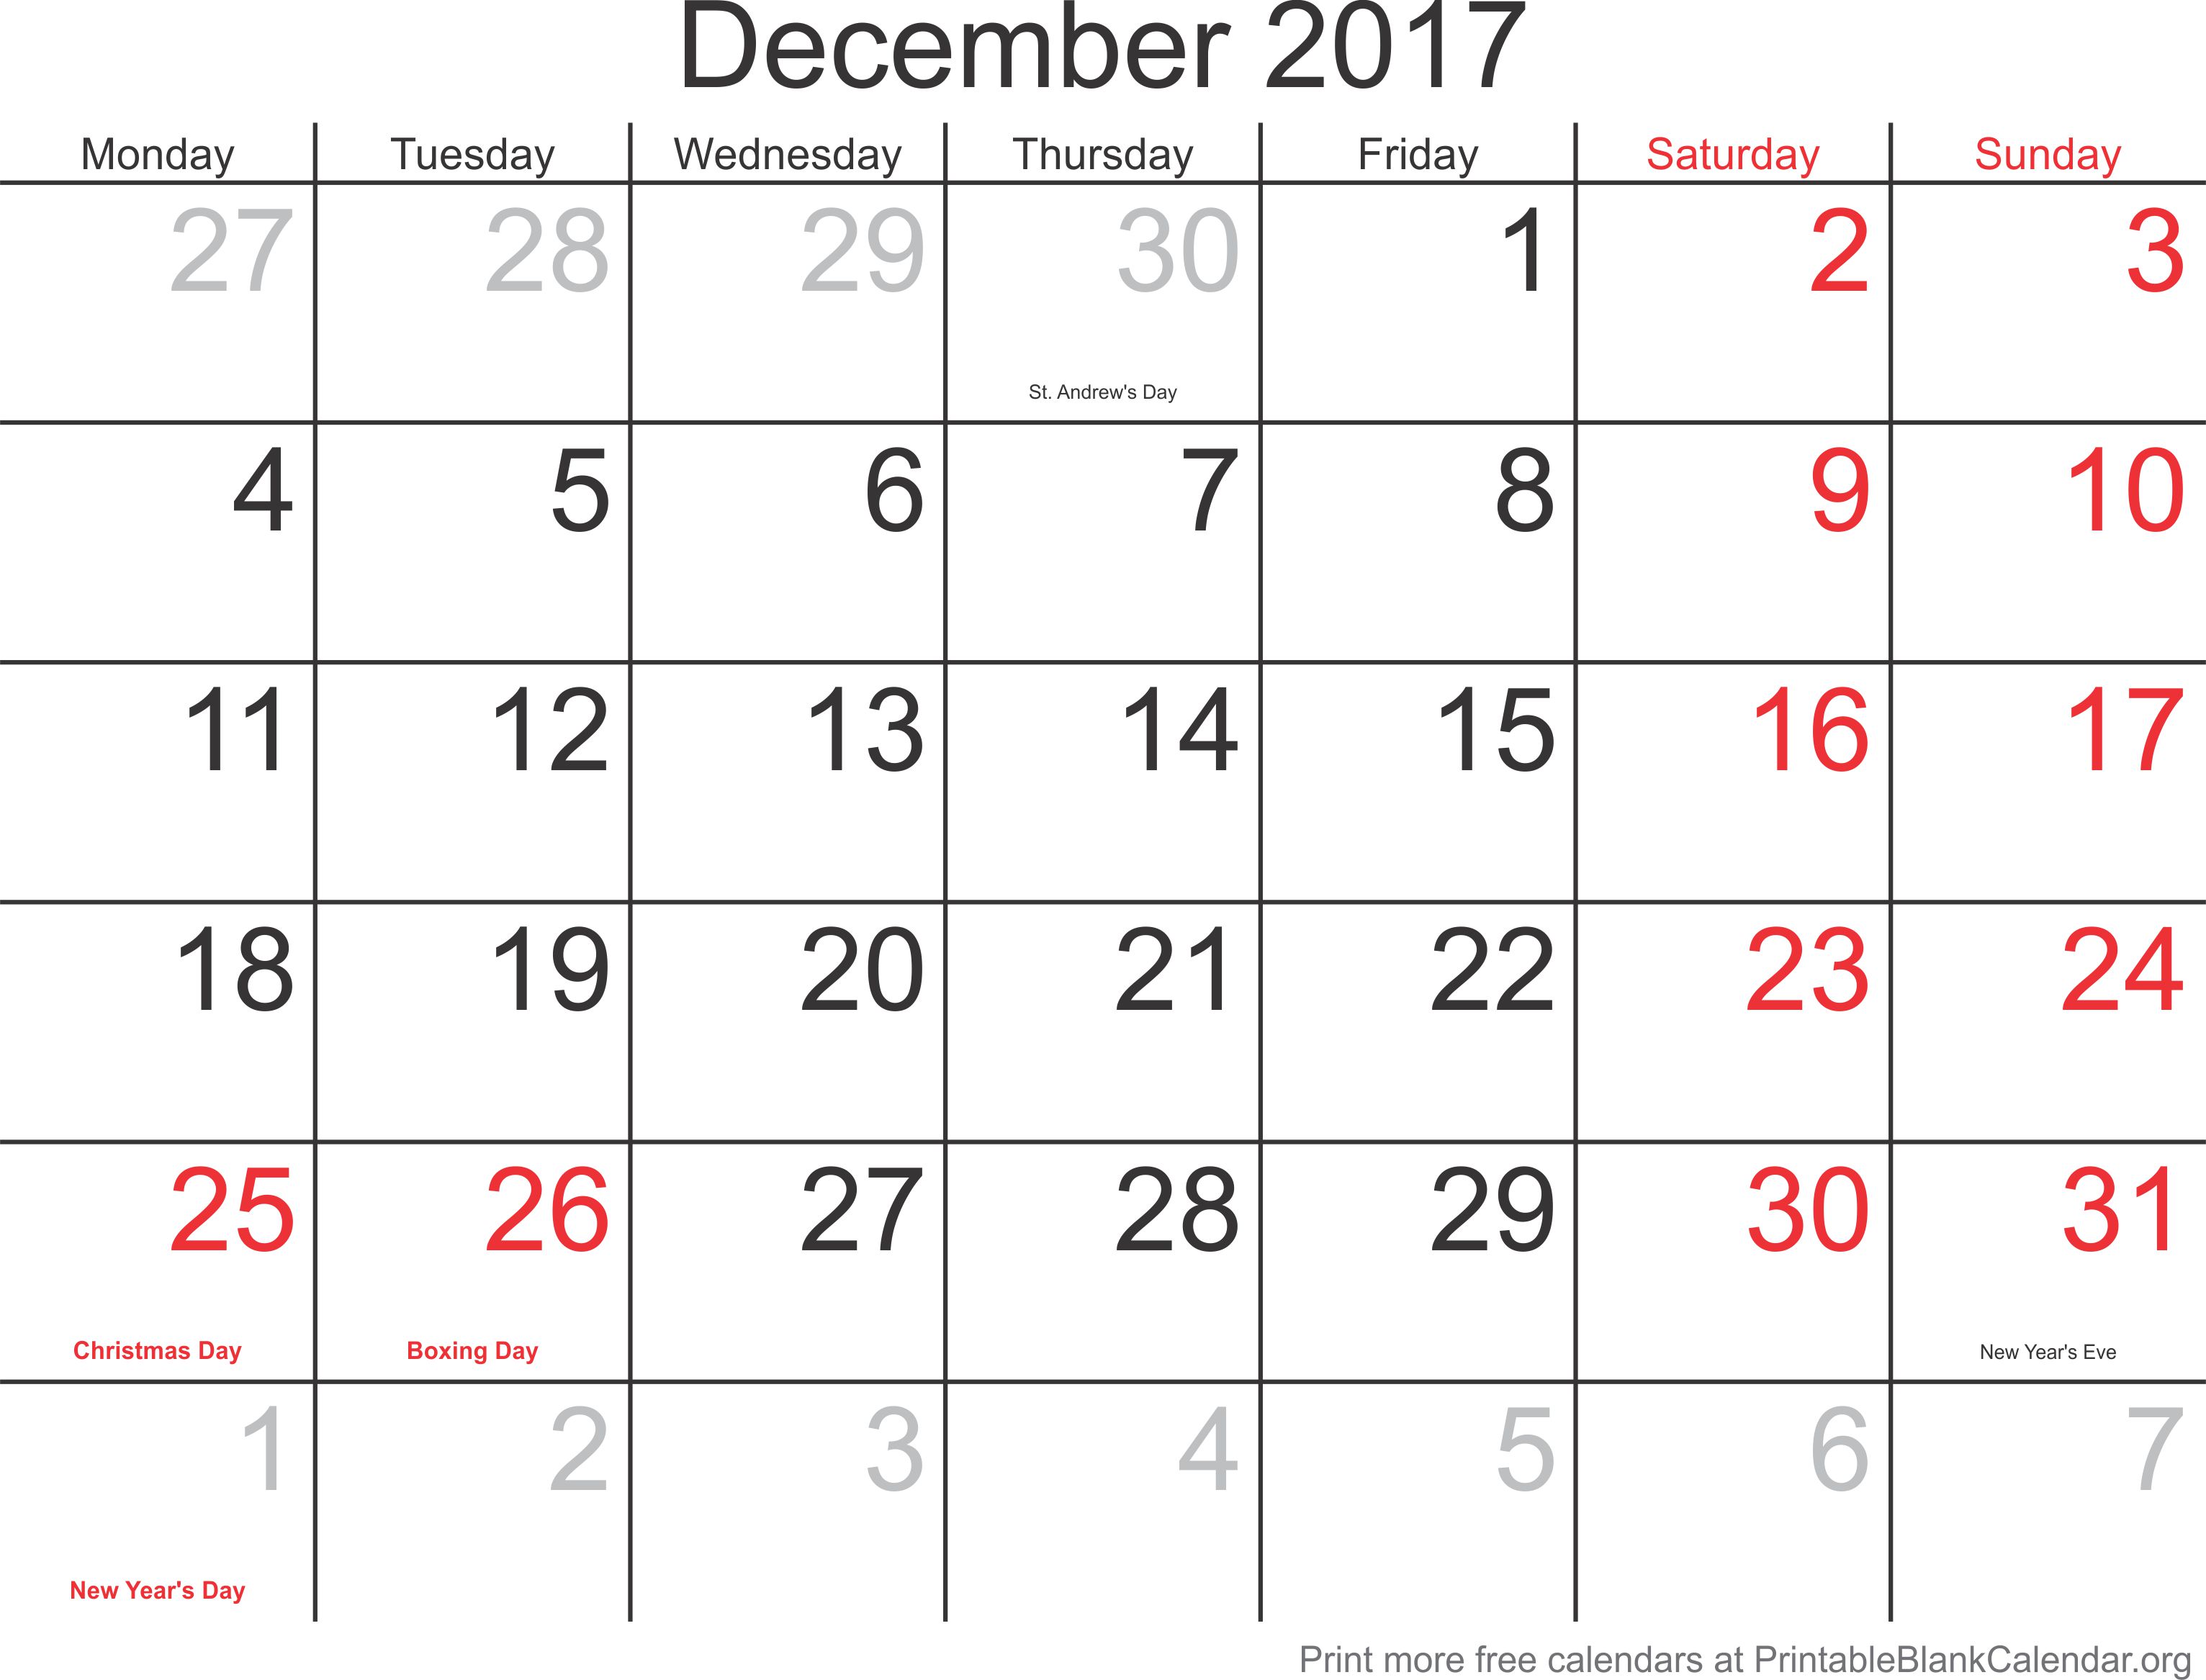 december-2017-free-printable-calendar-printable-blank-december-2017-calendar-free-printable